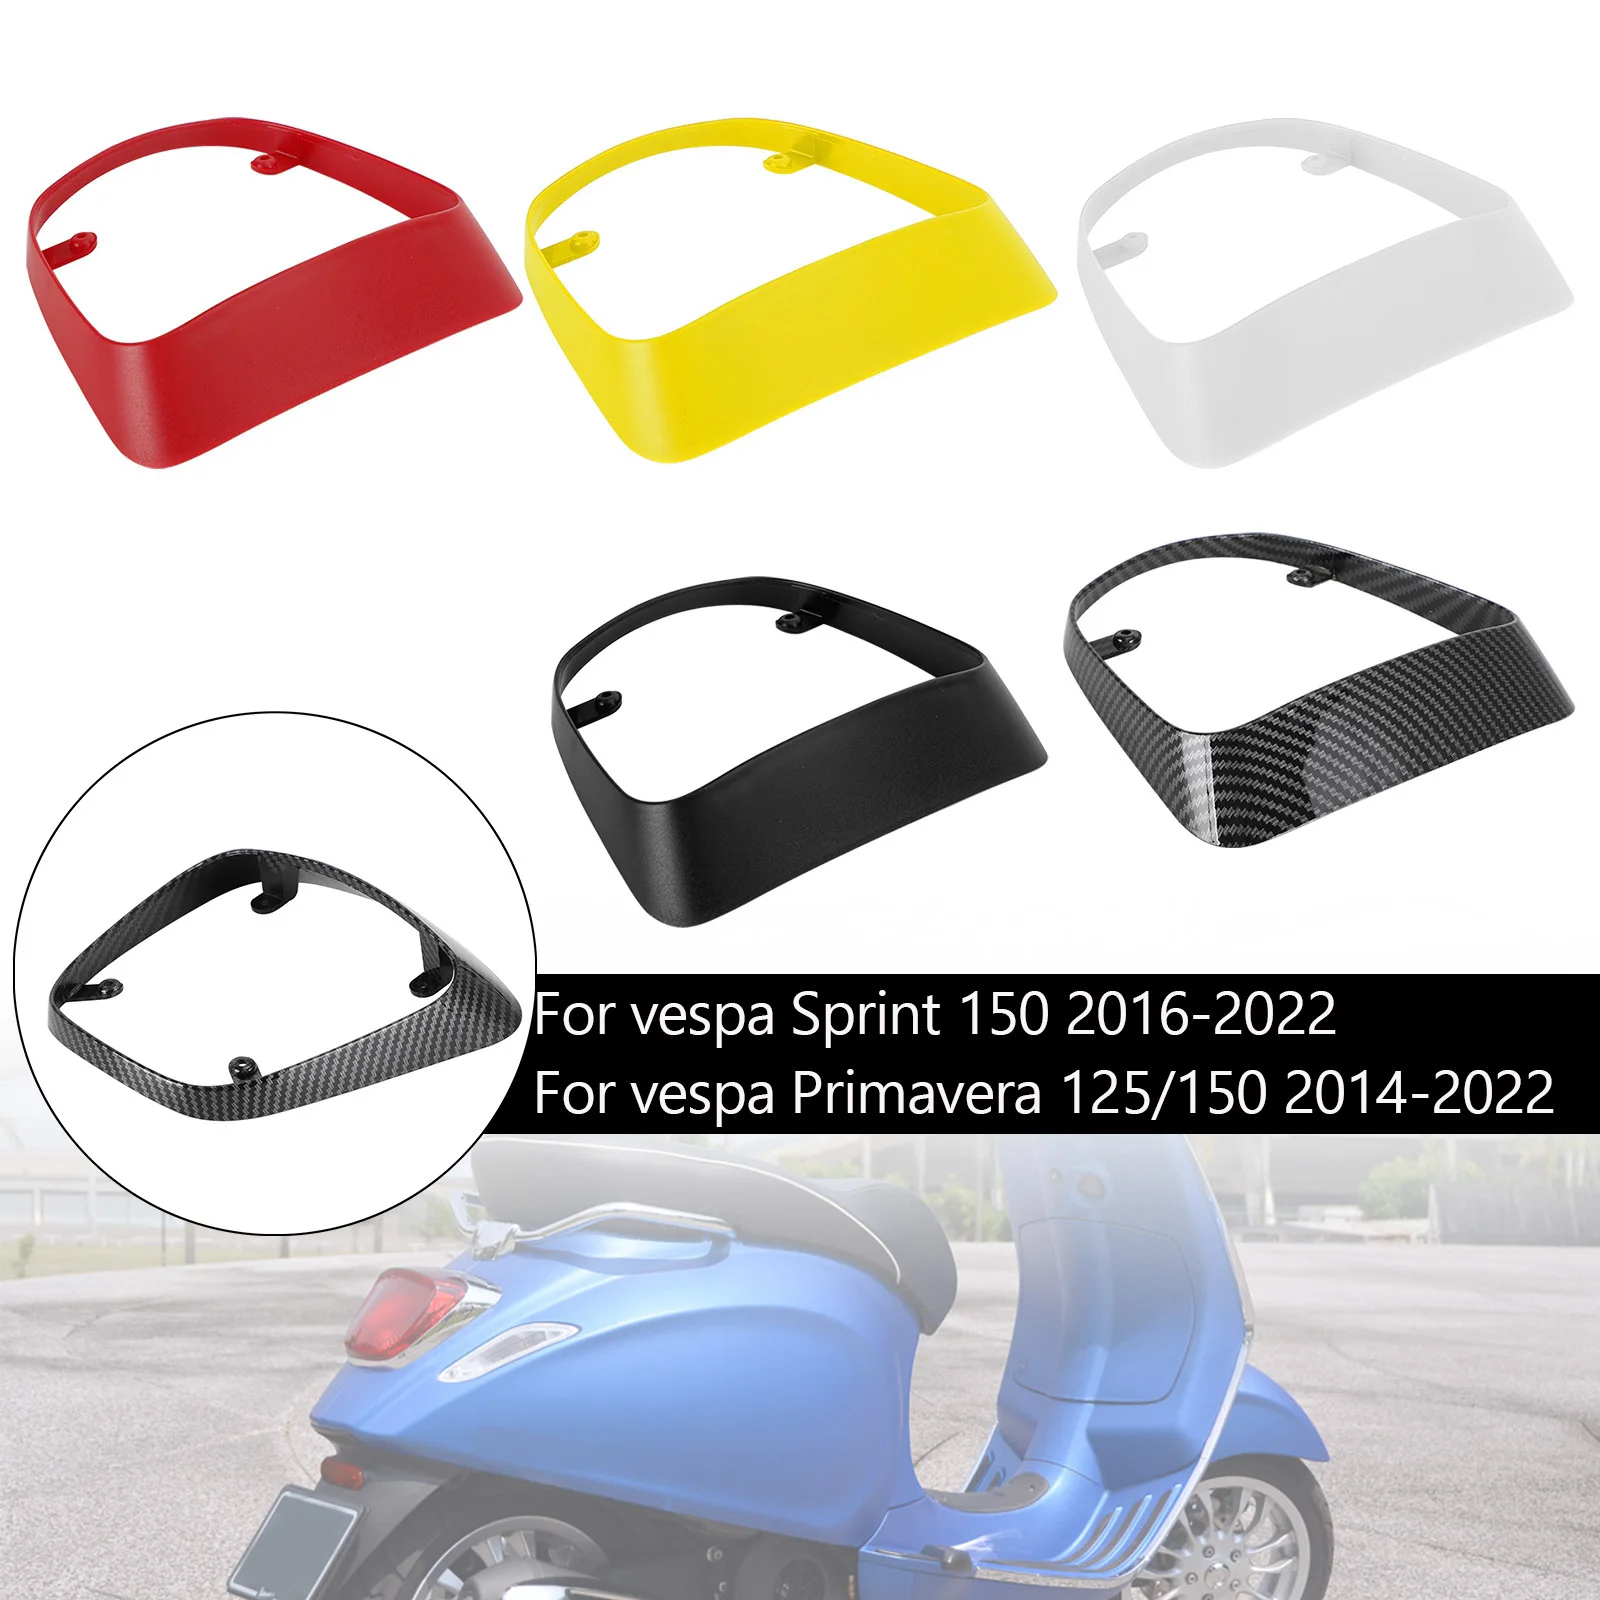 

Artudatech Tail Light Cover Rear Lamp Guard For Sprint Primavera 125/150 2014-2022 Motor Accessories